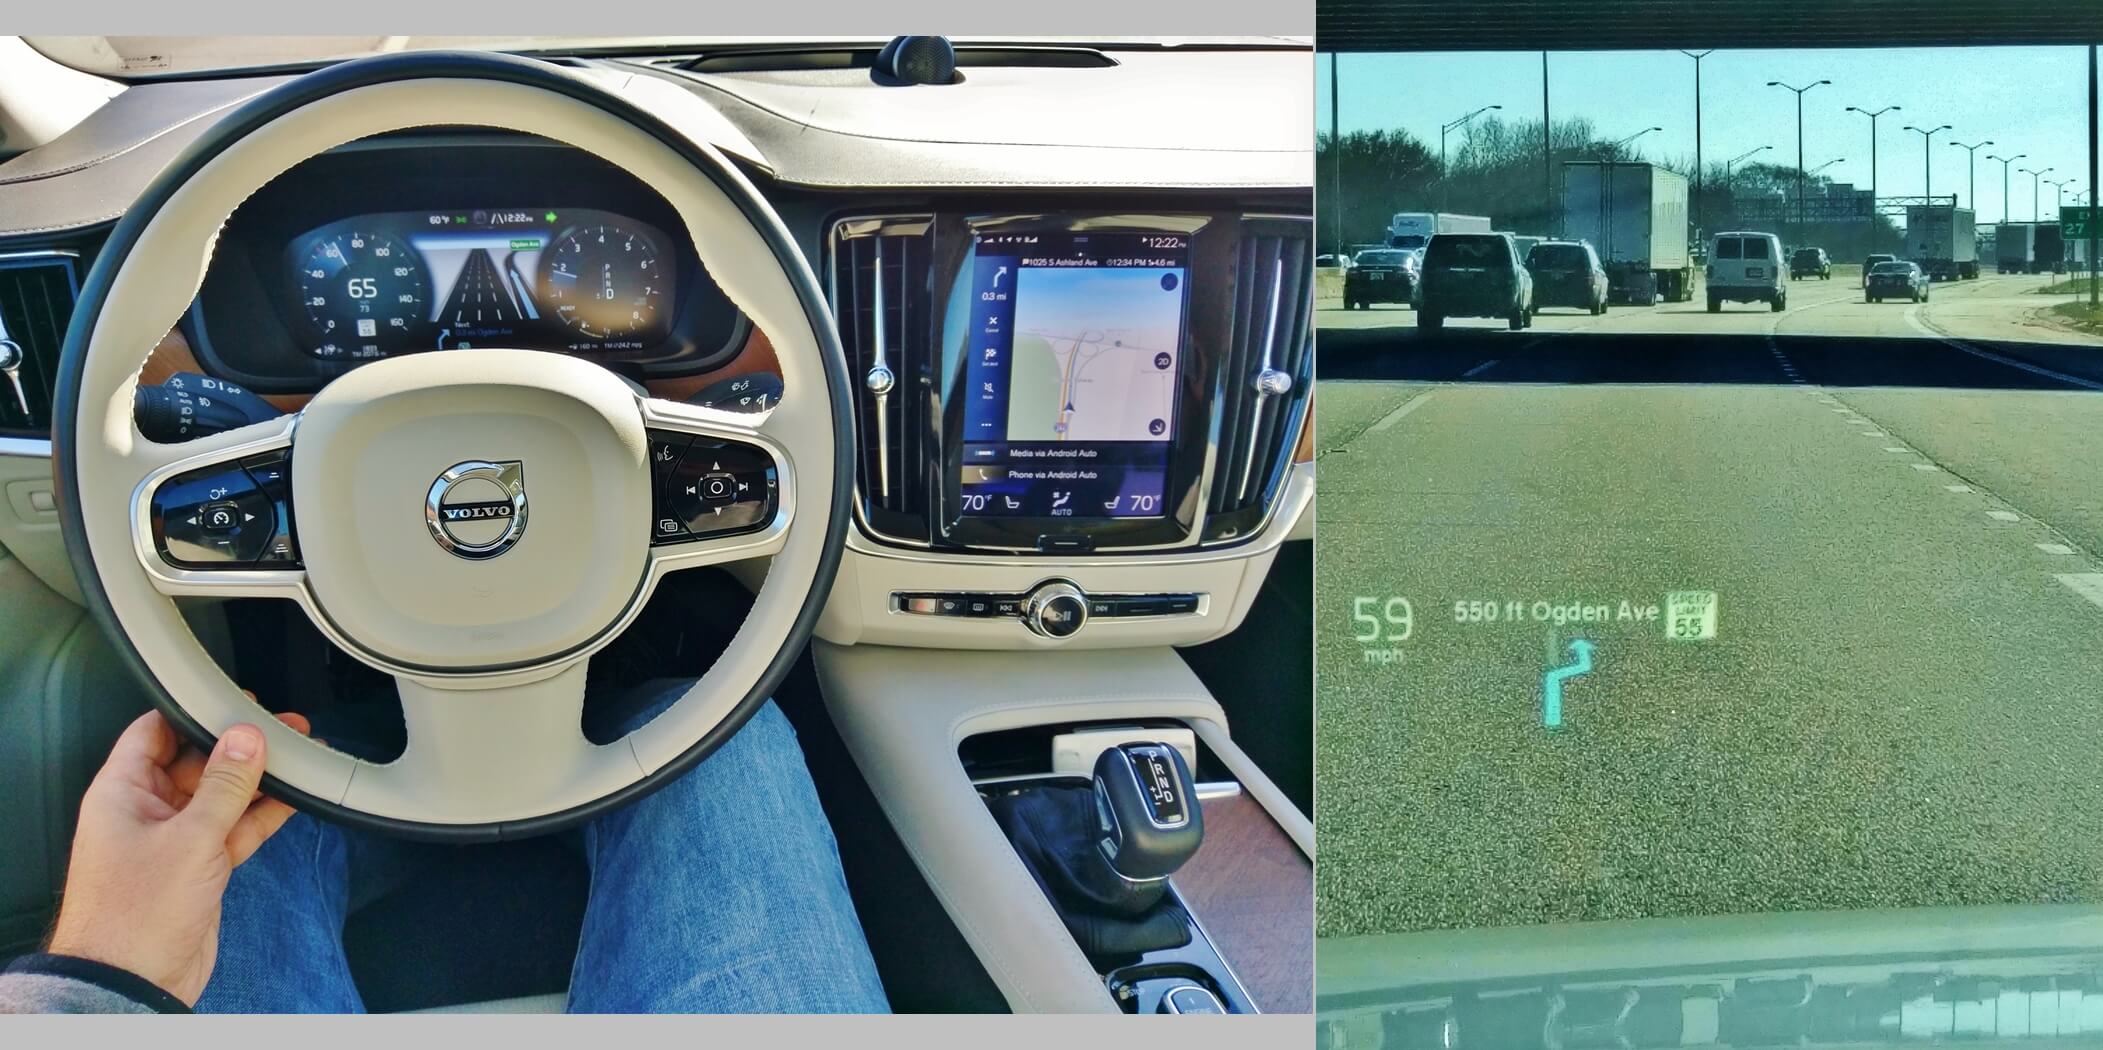 2018 Volvo S90 T6 AWD Inscription: 12.3 Digital Instrument cluster displays native GPS Navigation path, dual gauges, Pilot Assist 2 autonomous driving, road signage; w/ redundant Heads Up Display